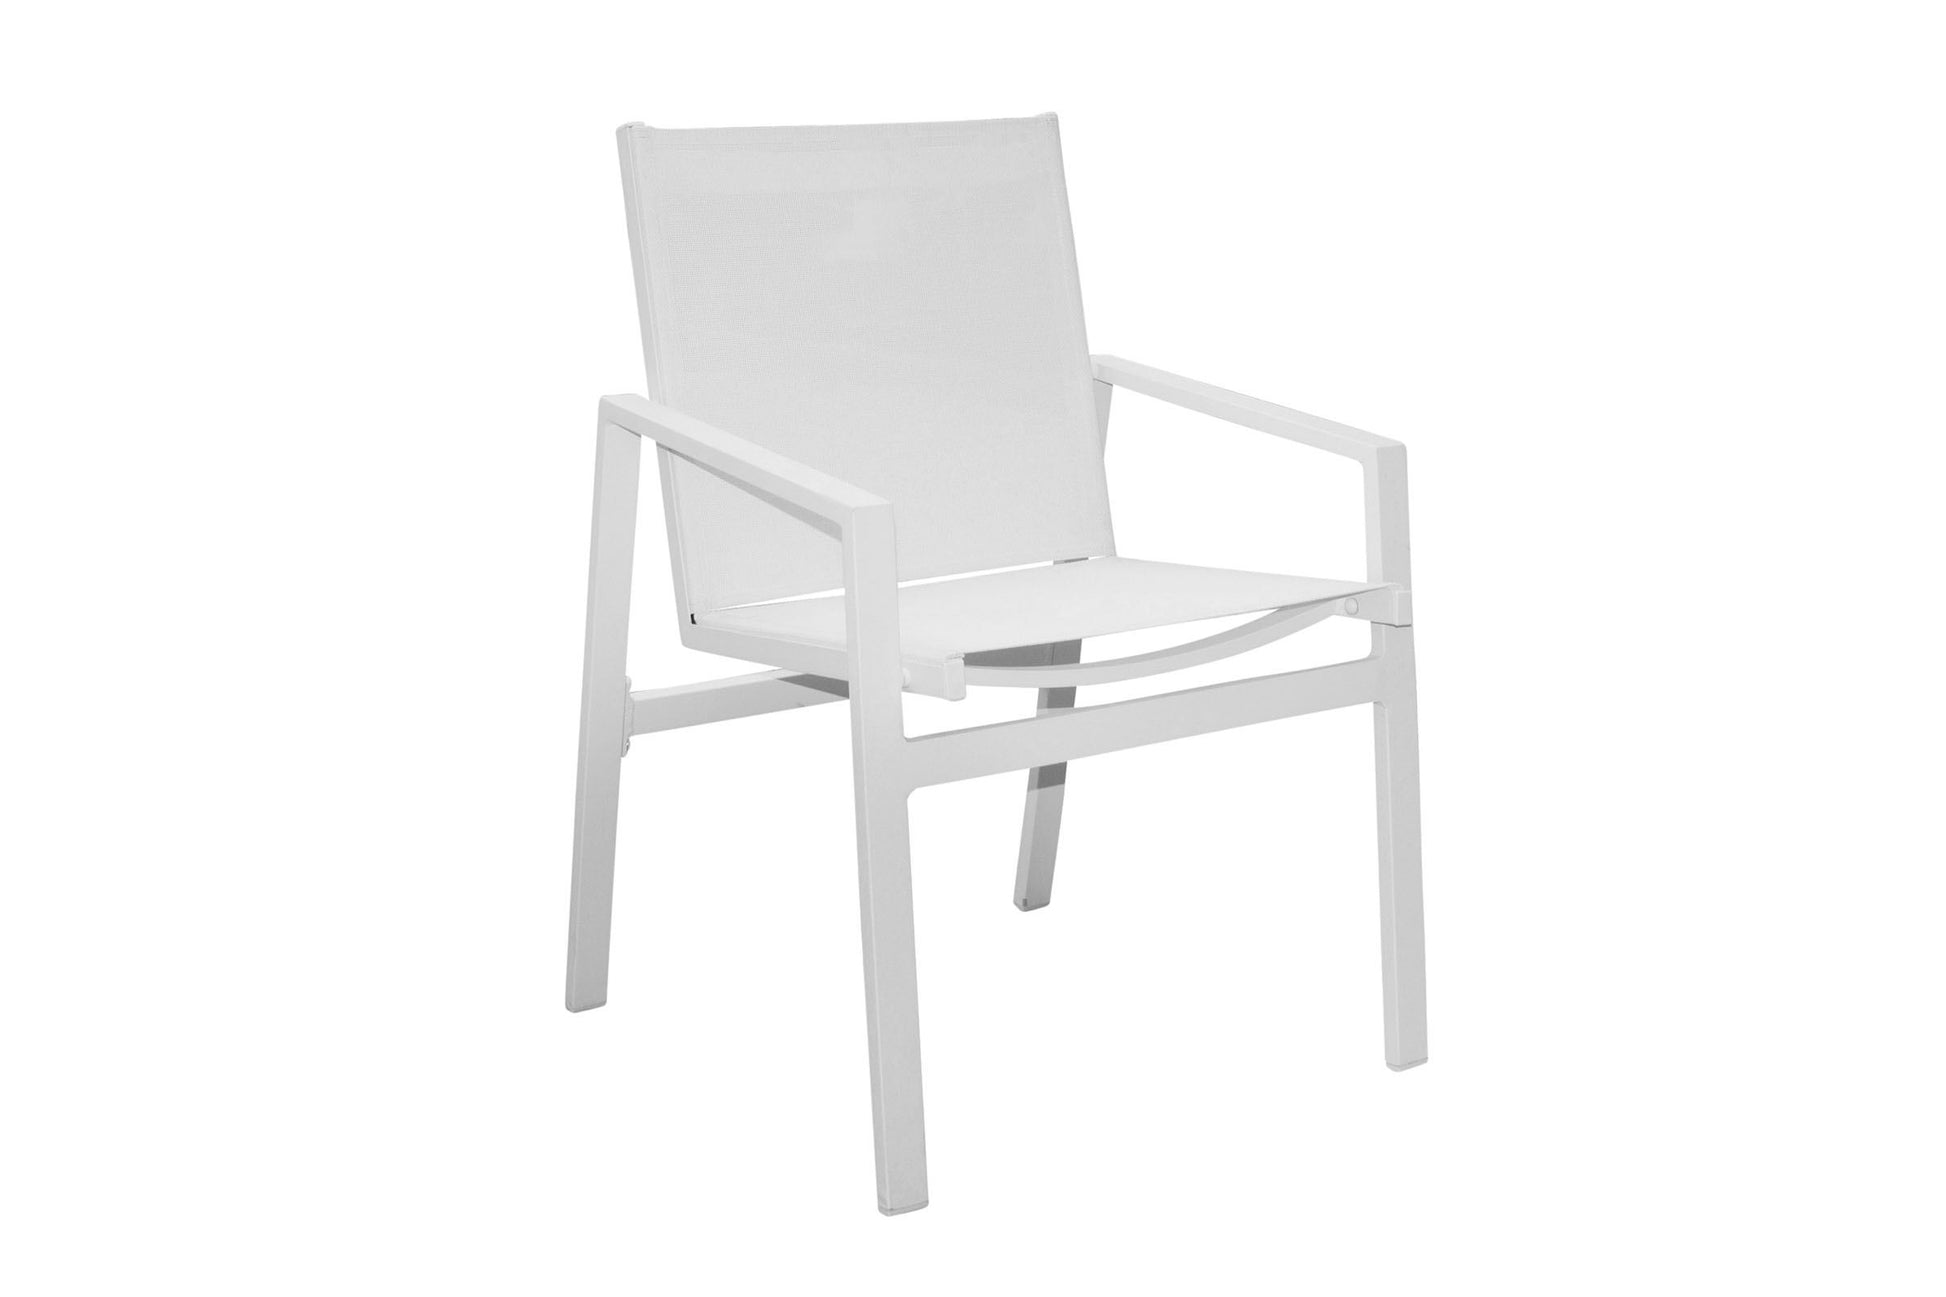 Outdoor Patio Furniture Set Panama Jack Mykonos Collection 5 Piece Side Chair Dining Set PJO-2401-WHT-5DA